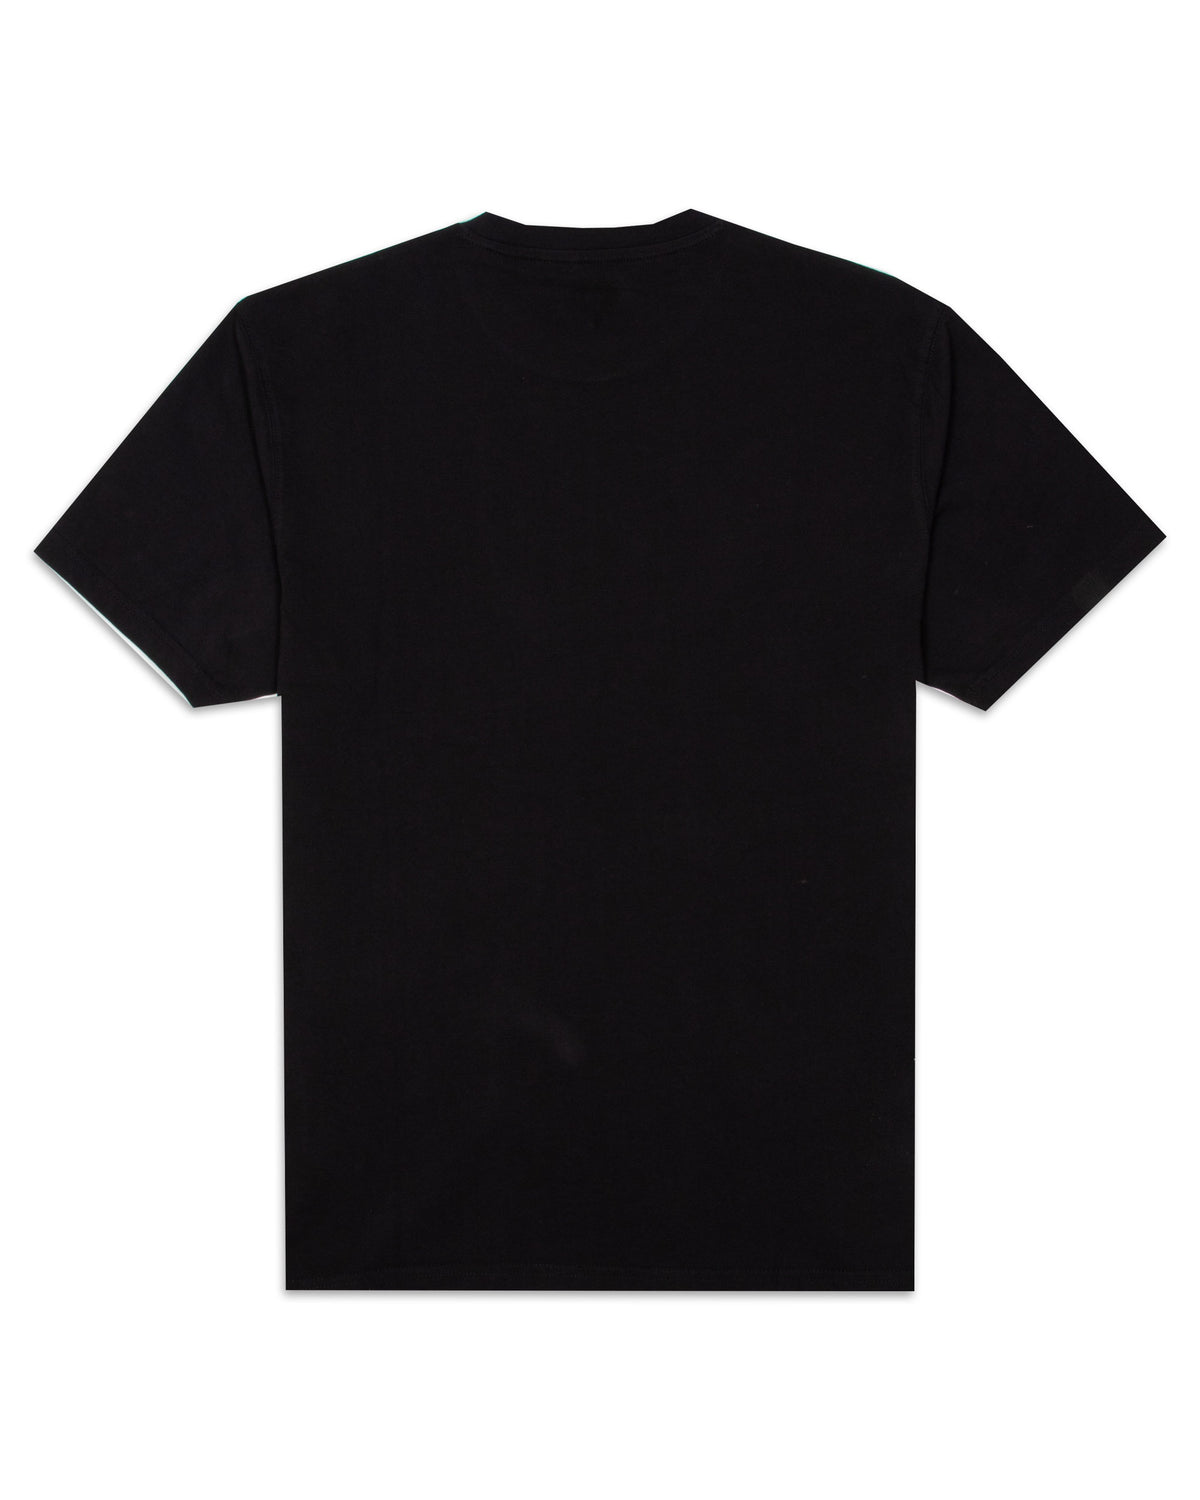 T-Shirt Sundek Onda Limited Edition Black